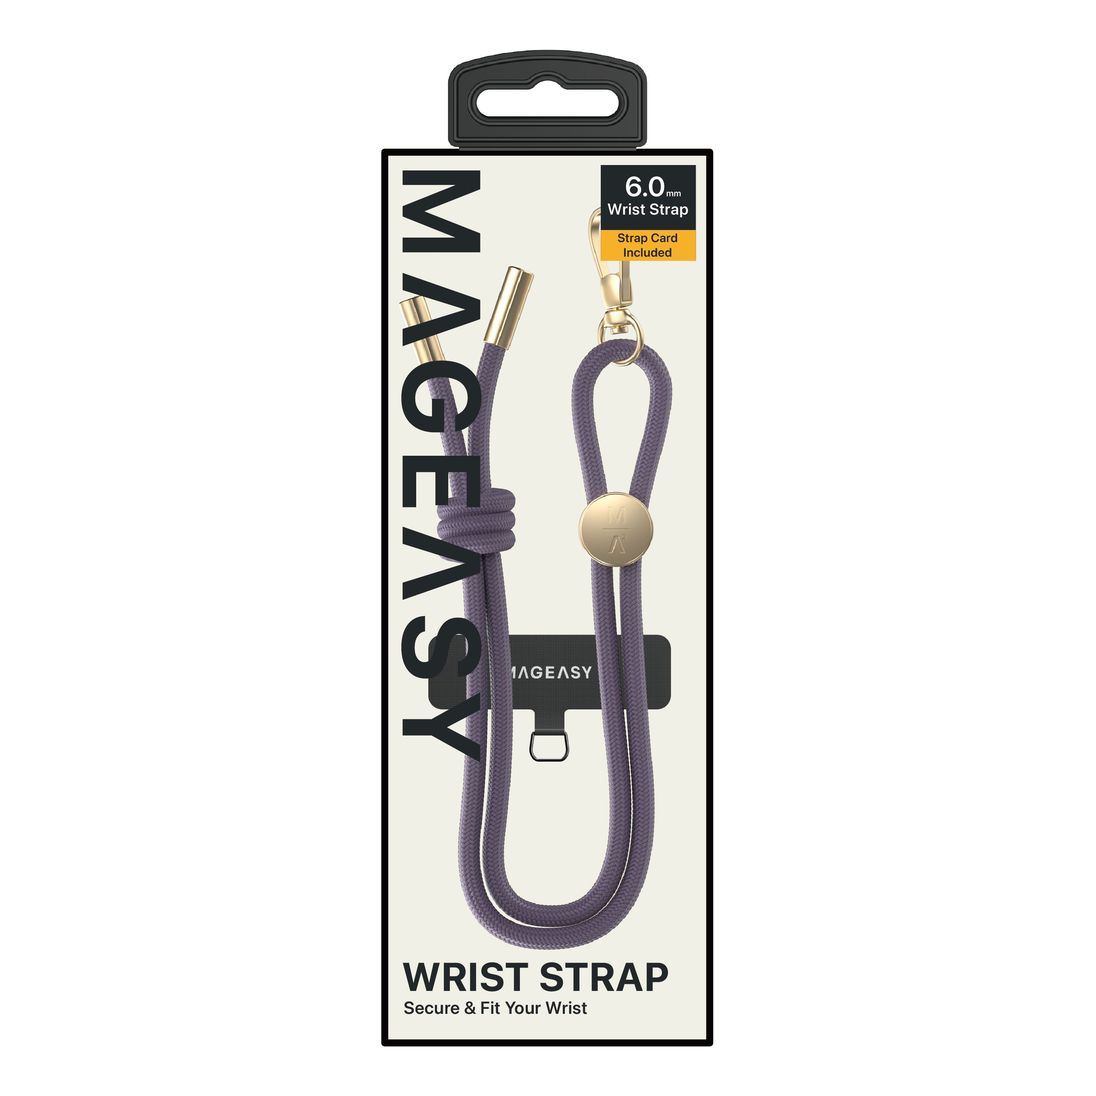 Mageasy Wrist Strap & Strap Card - 6mm - Very Peri